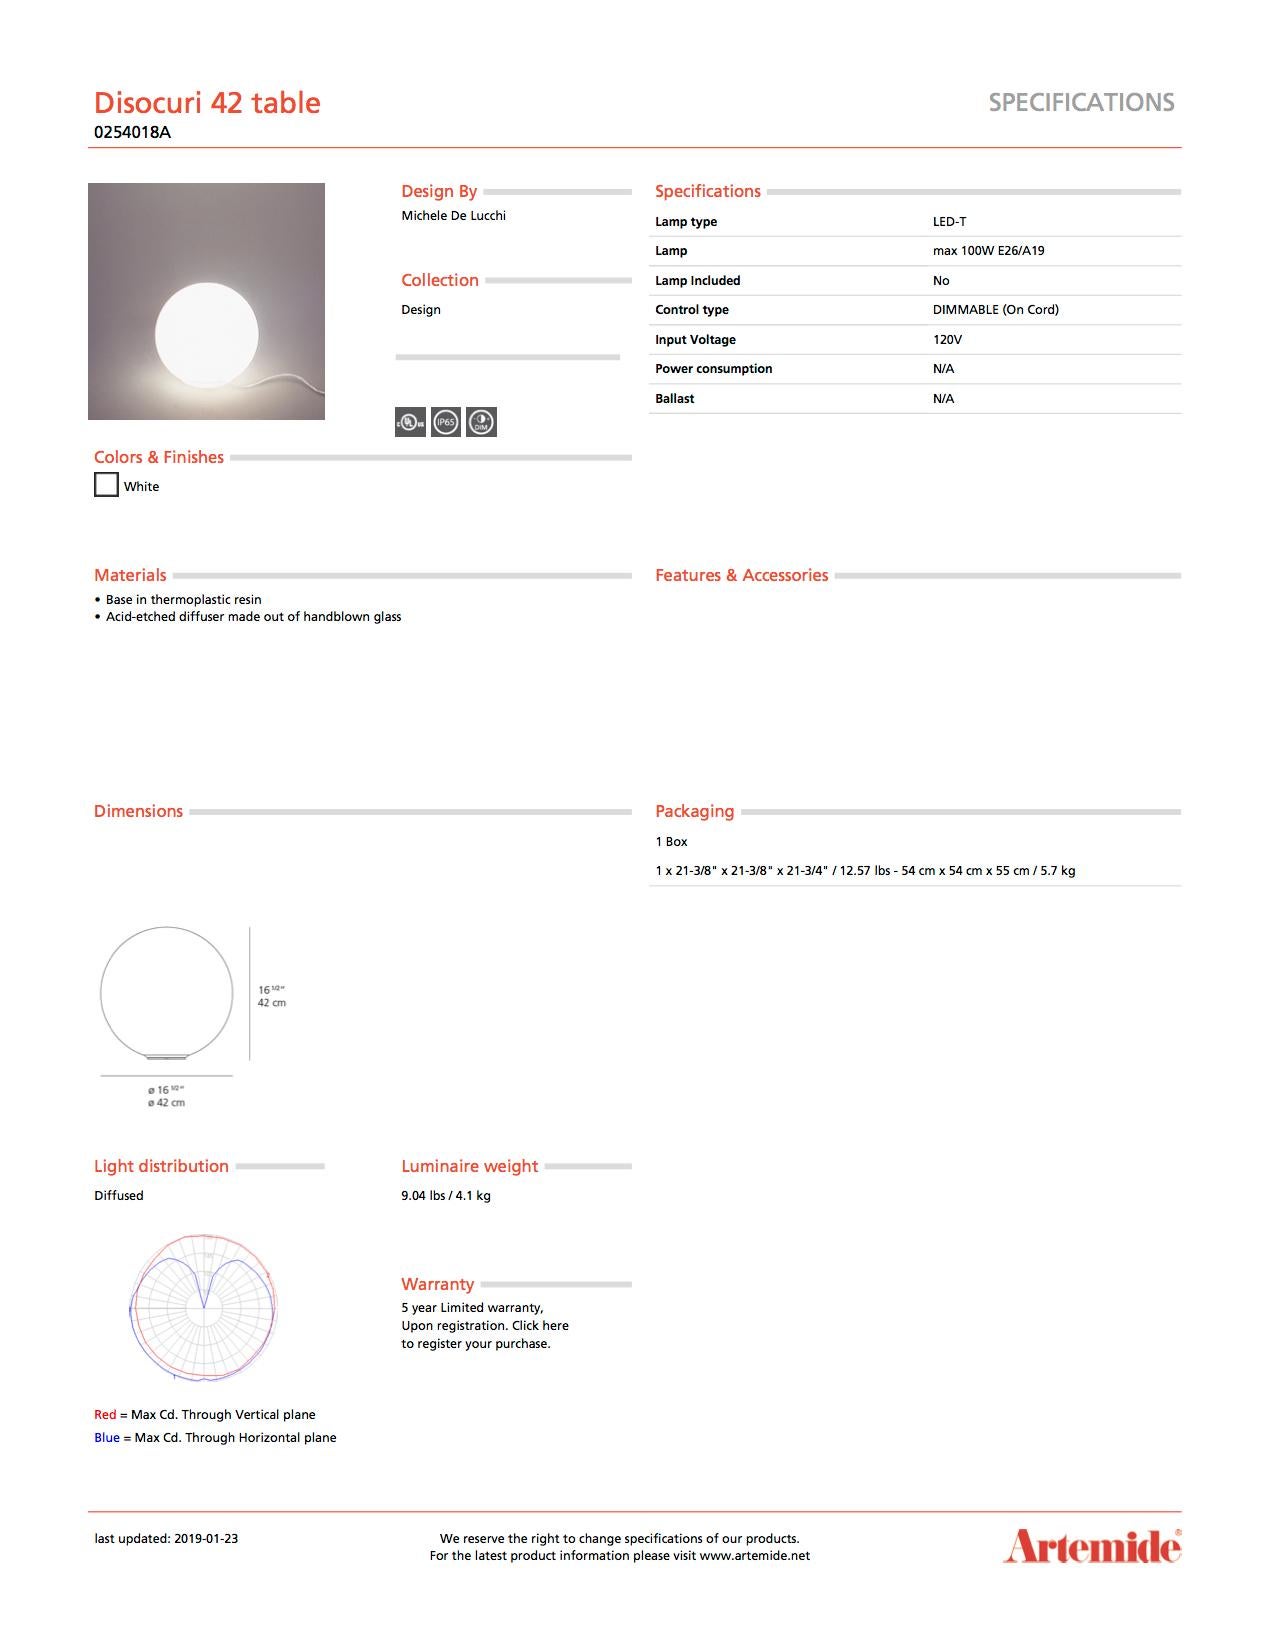 Italian Artemide Disocuri 42 Table Lamp in White For Sale